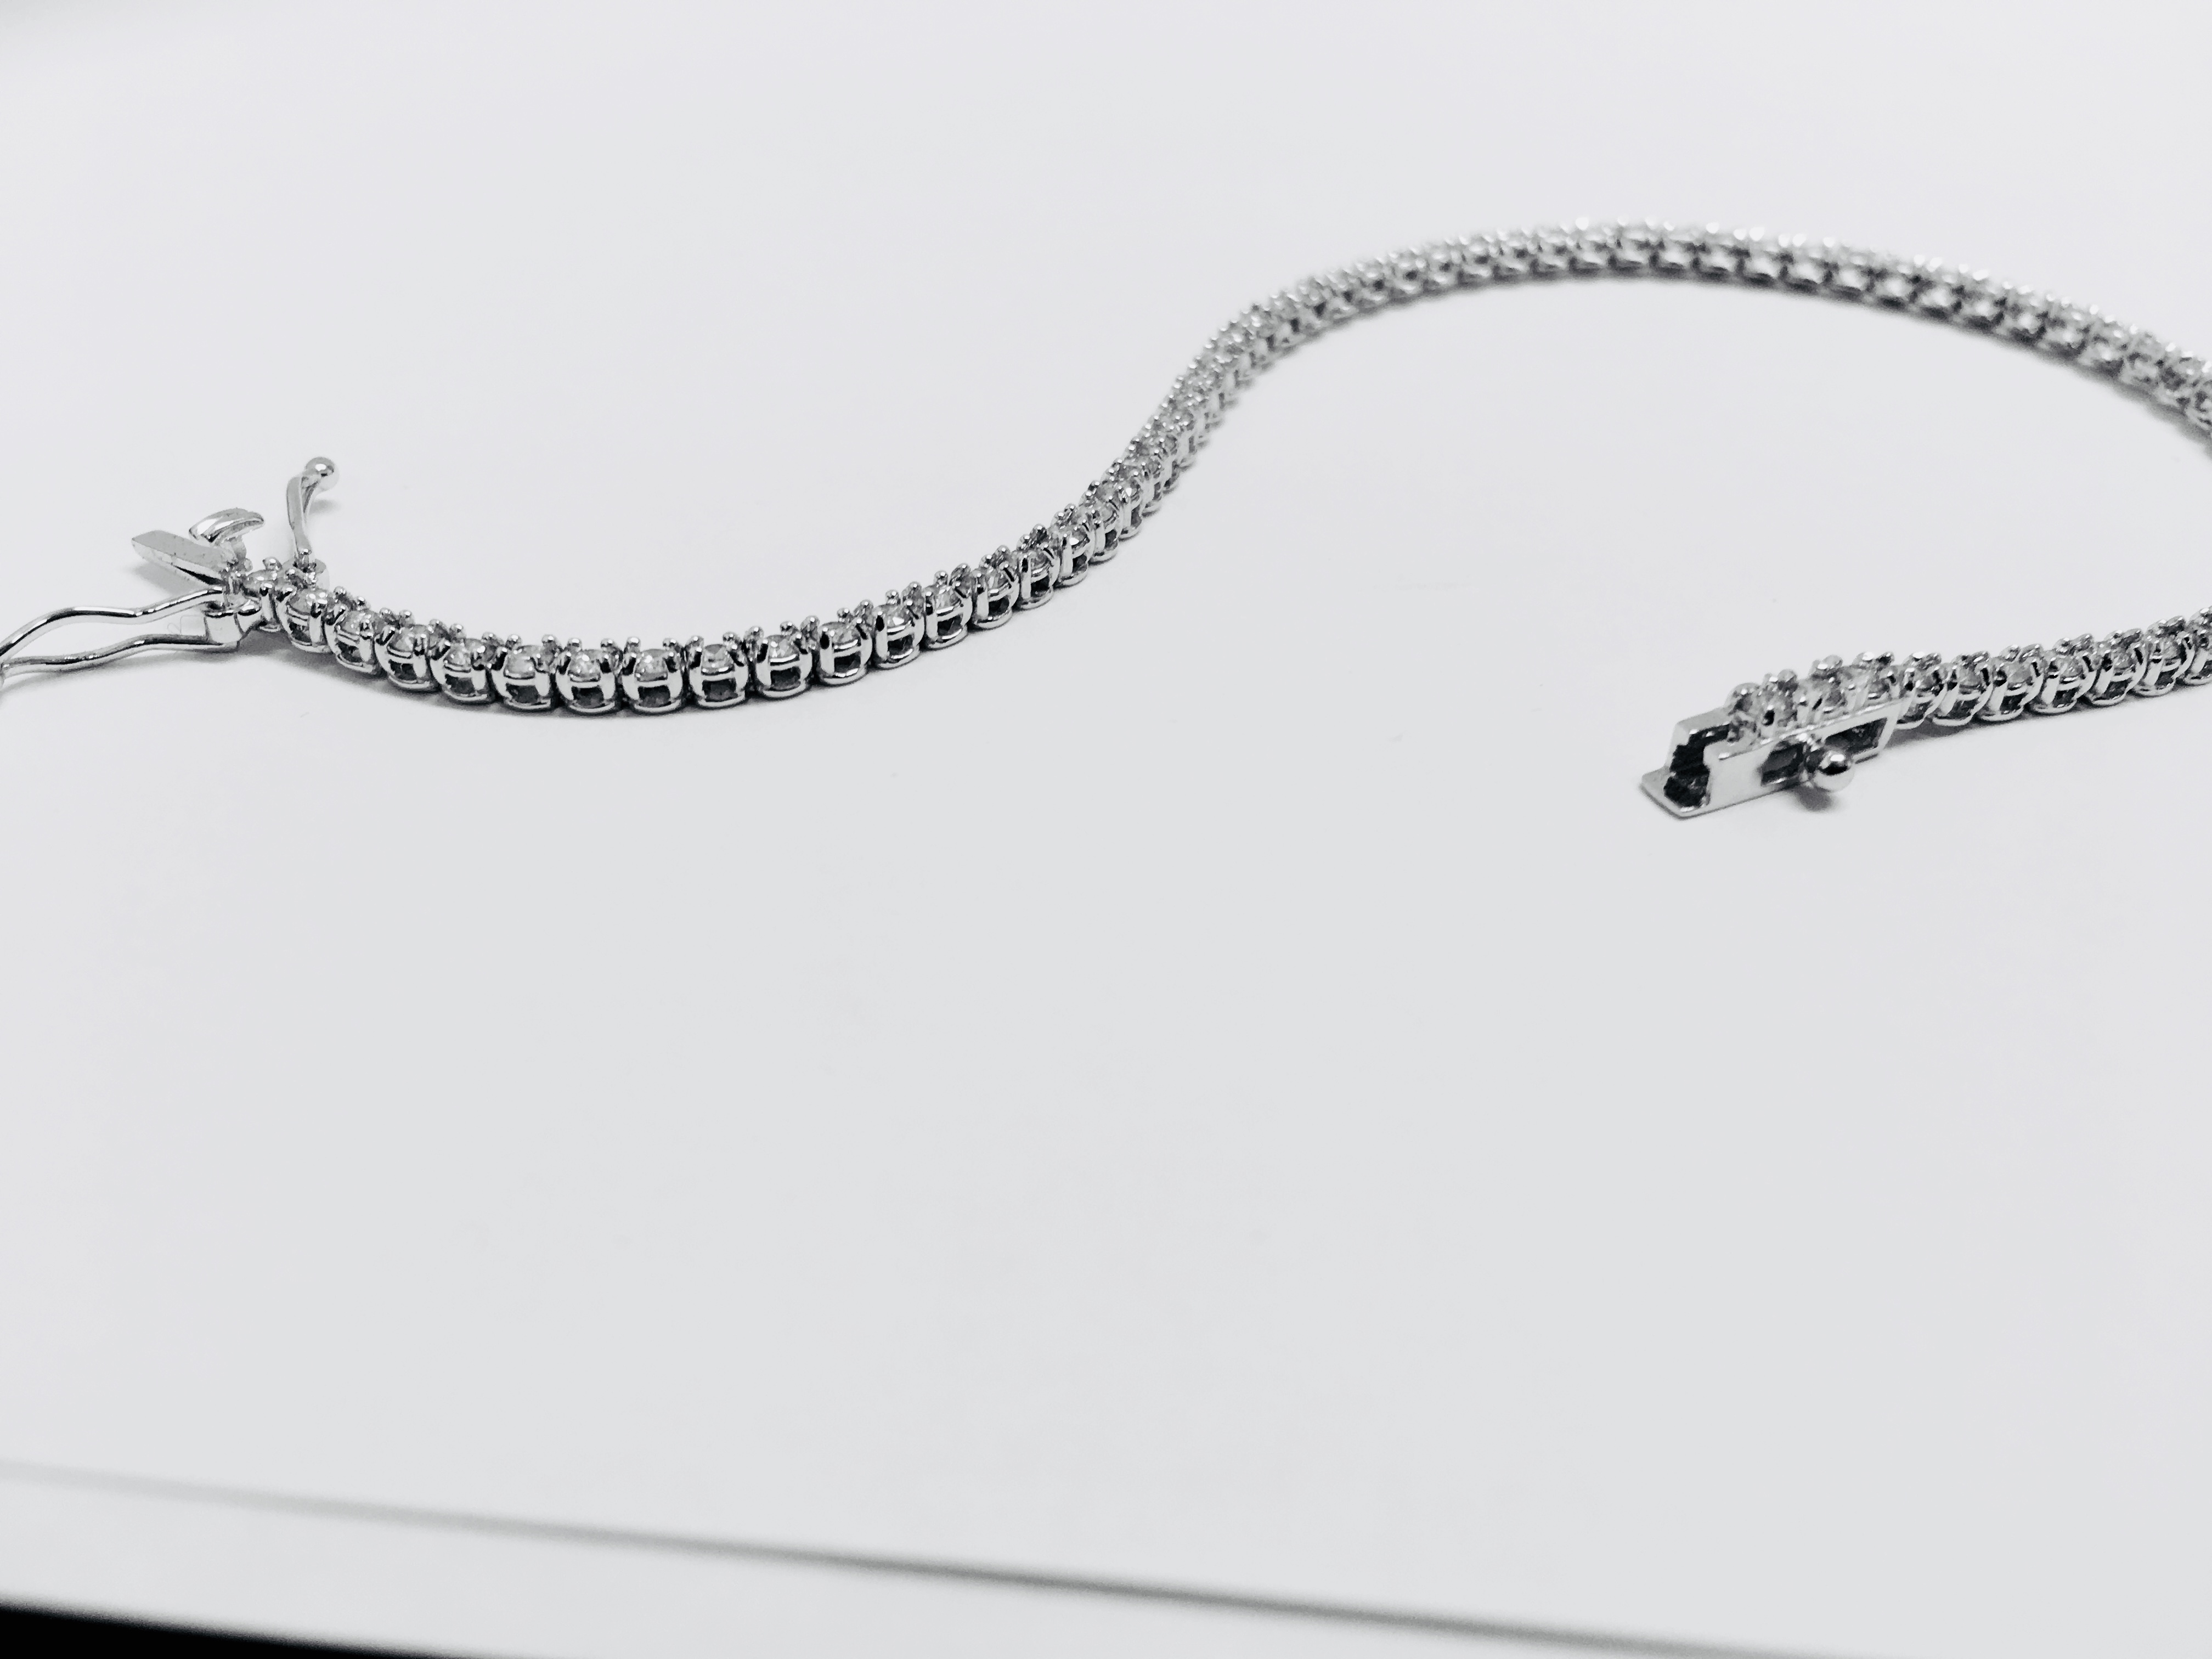 2.10ct diamond tennis bracelet with 70 brilliant cut diamonds - Image 23 of 28